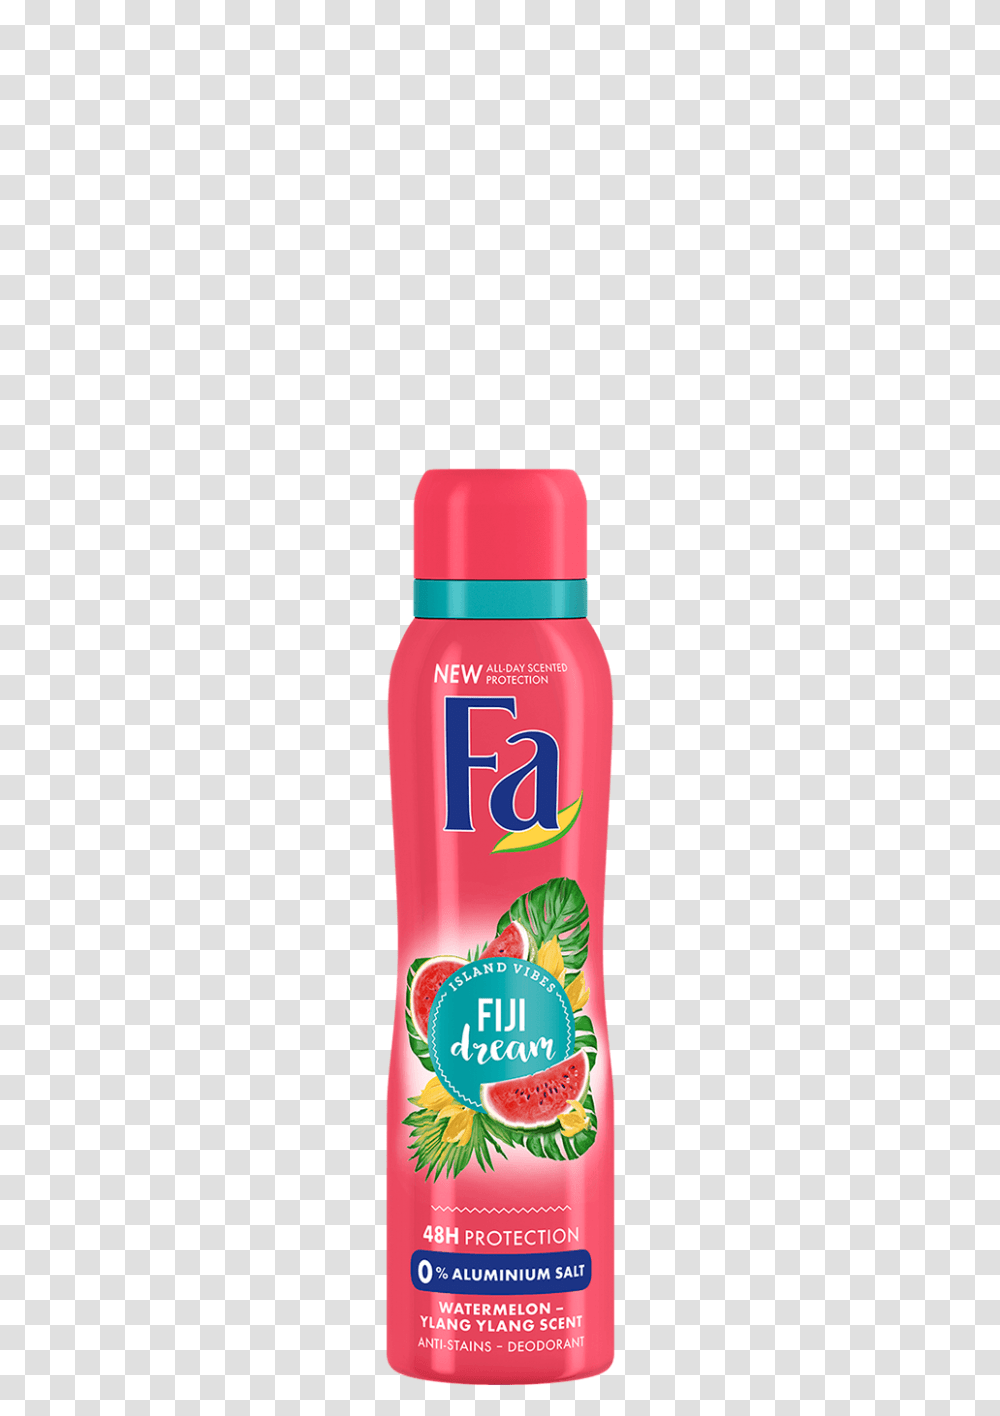 Island Vibes Fiji Dream Deodorant Spray, Cosmetics, Ketchup, Food, Bottle Transparent Png